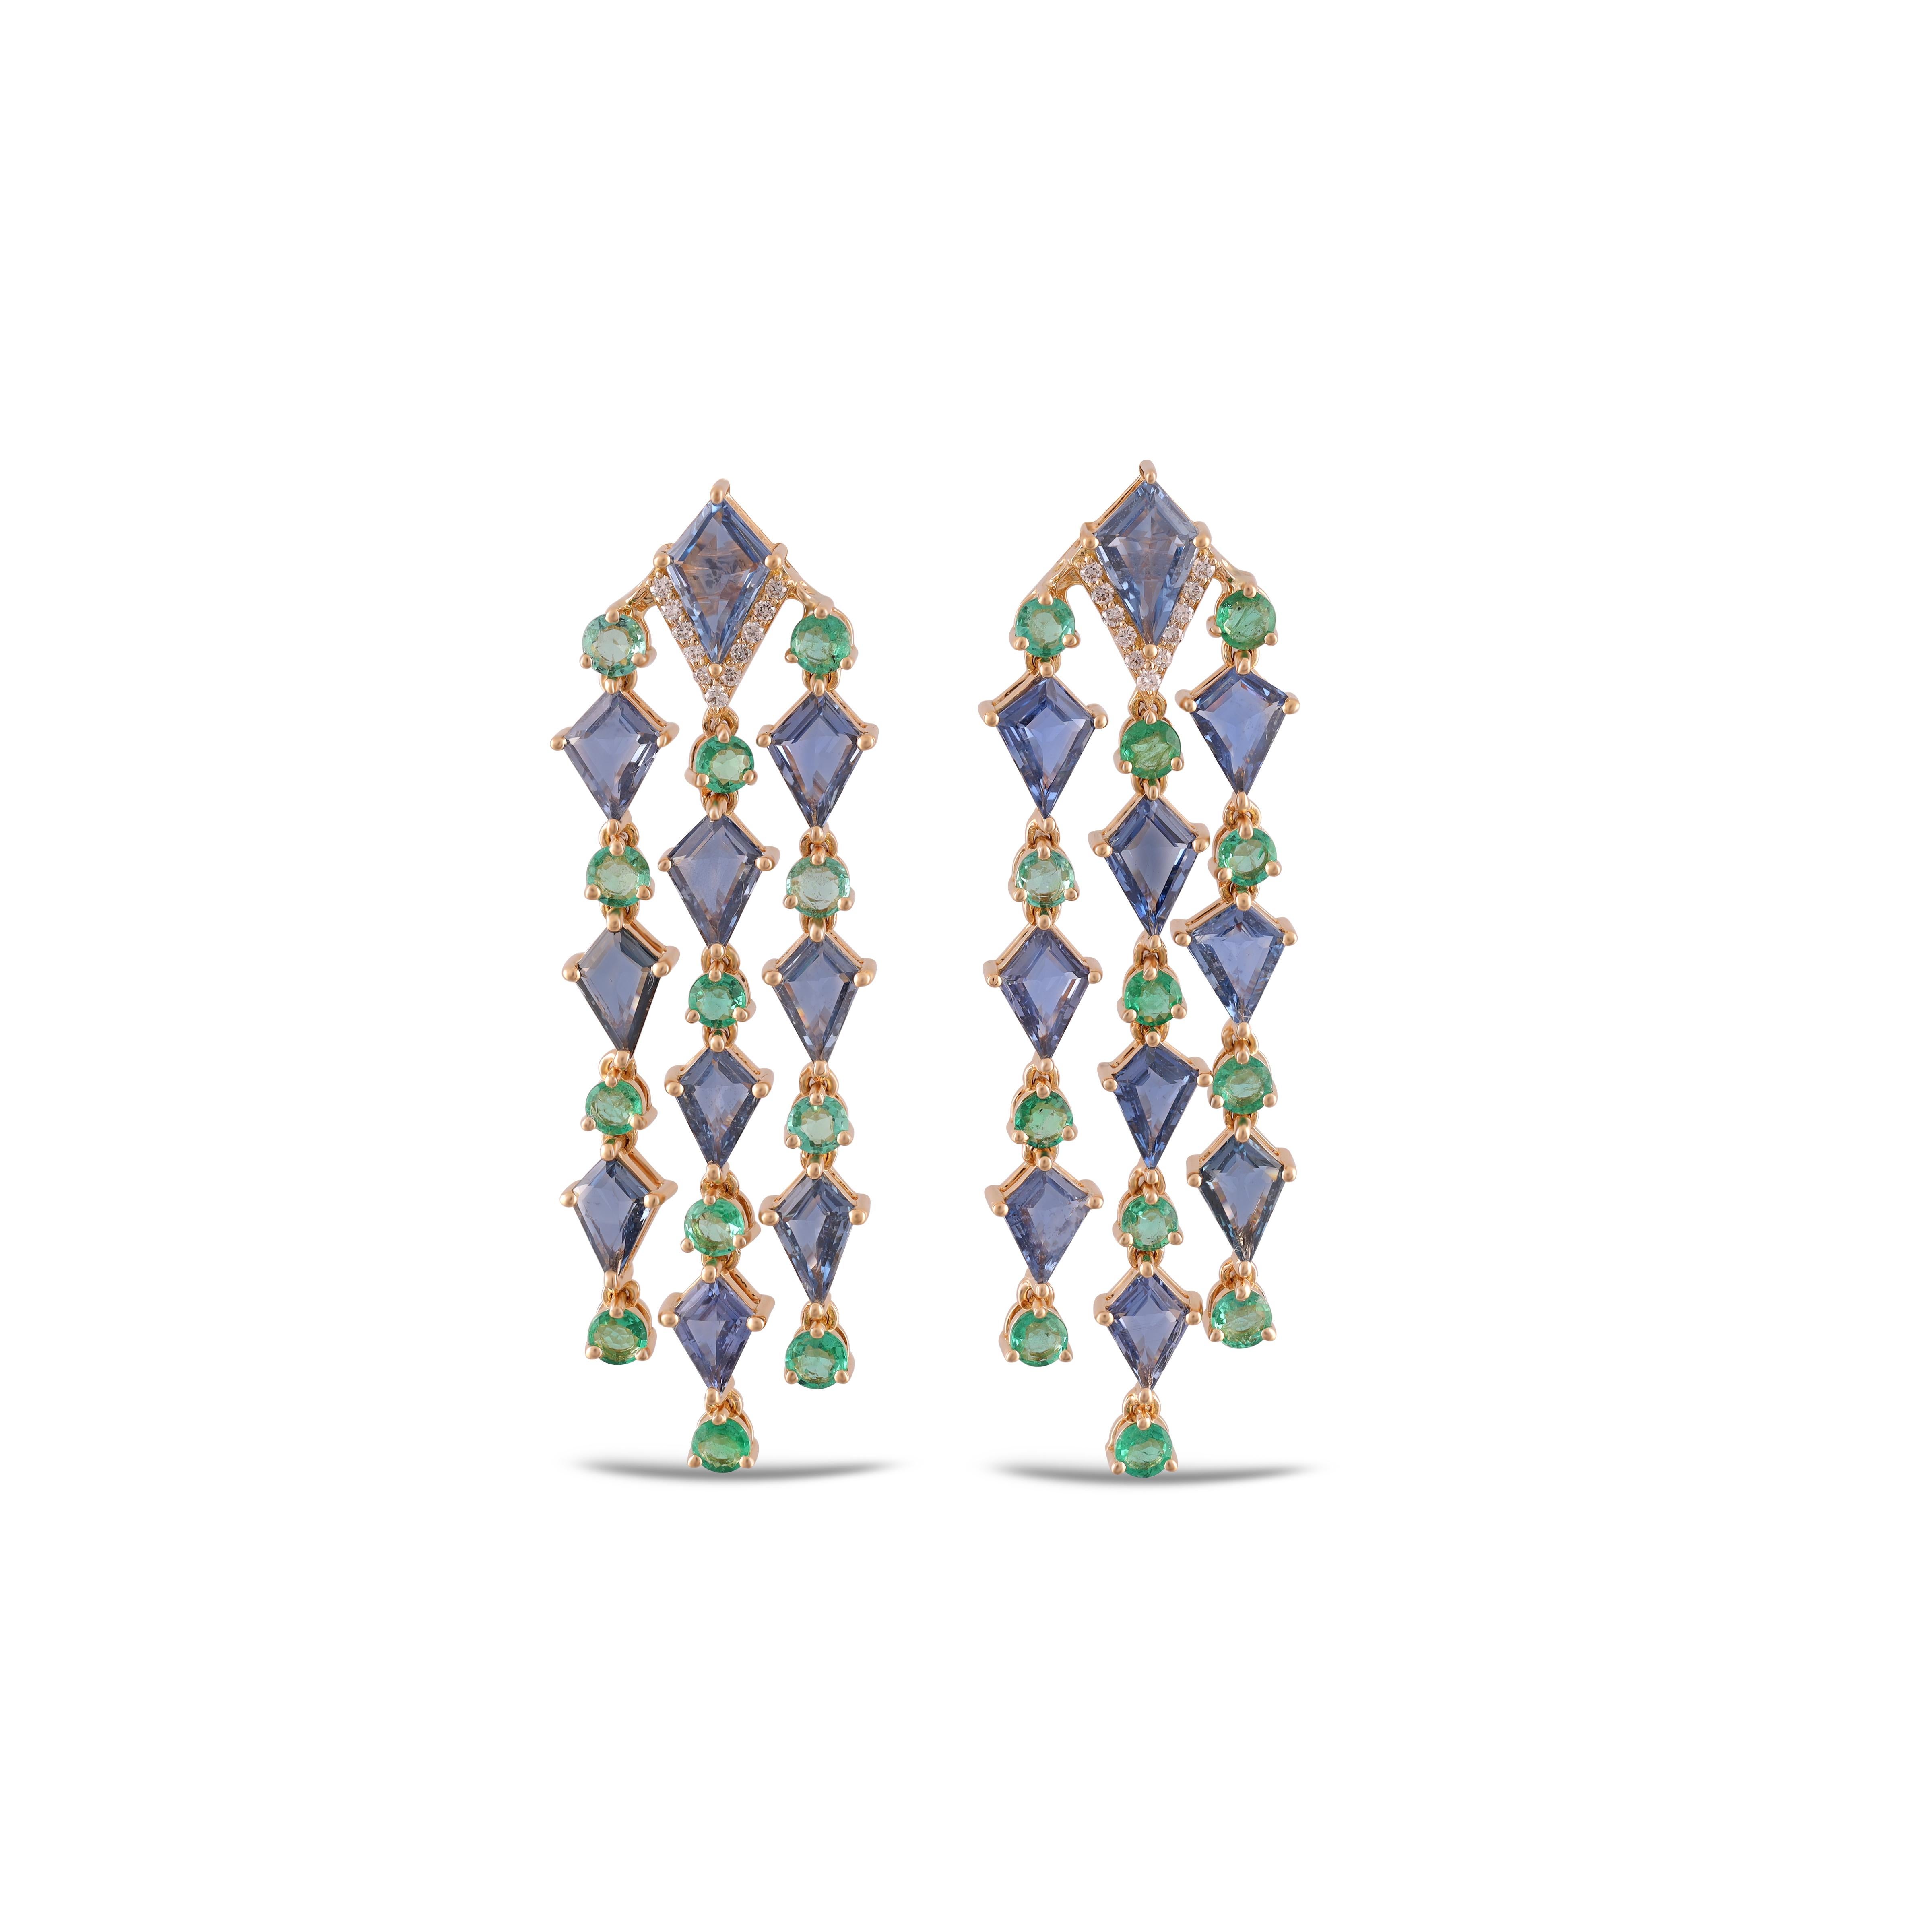 Emerald 1.77 Carat
Sapphire 8.03 Carat
Diamond 0.14 Carat
Rose Gold 18K.



